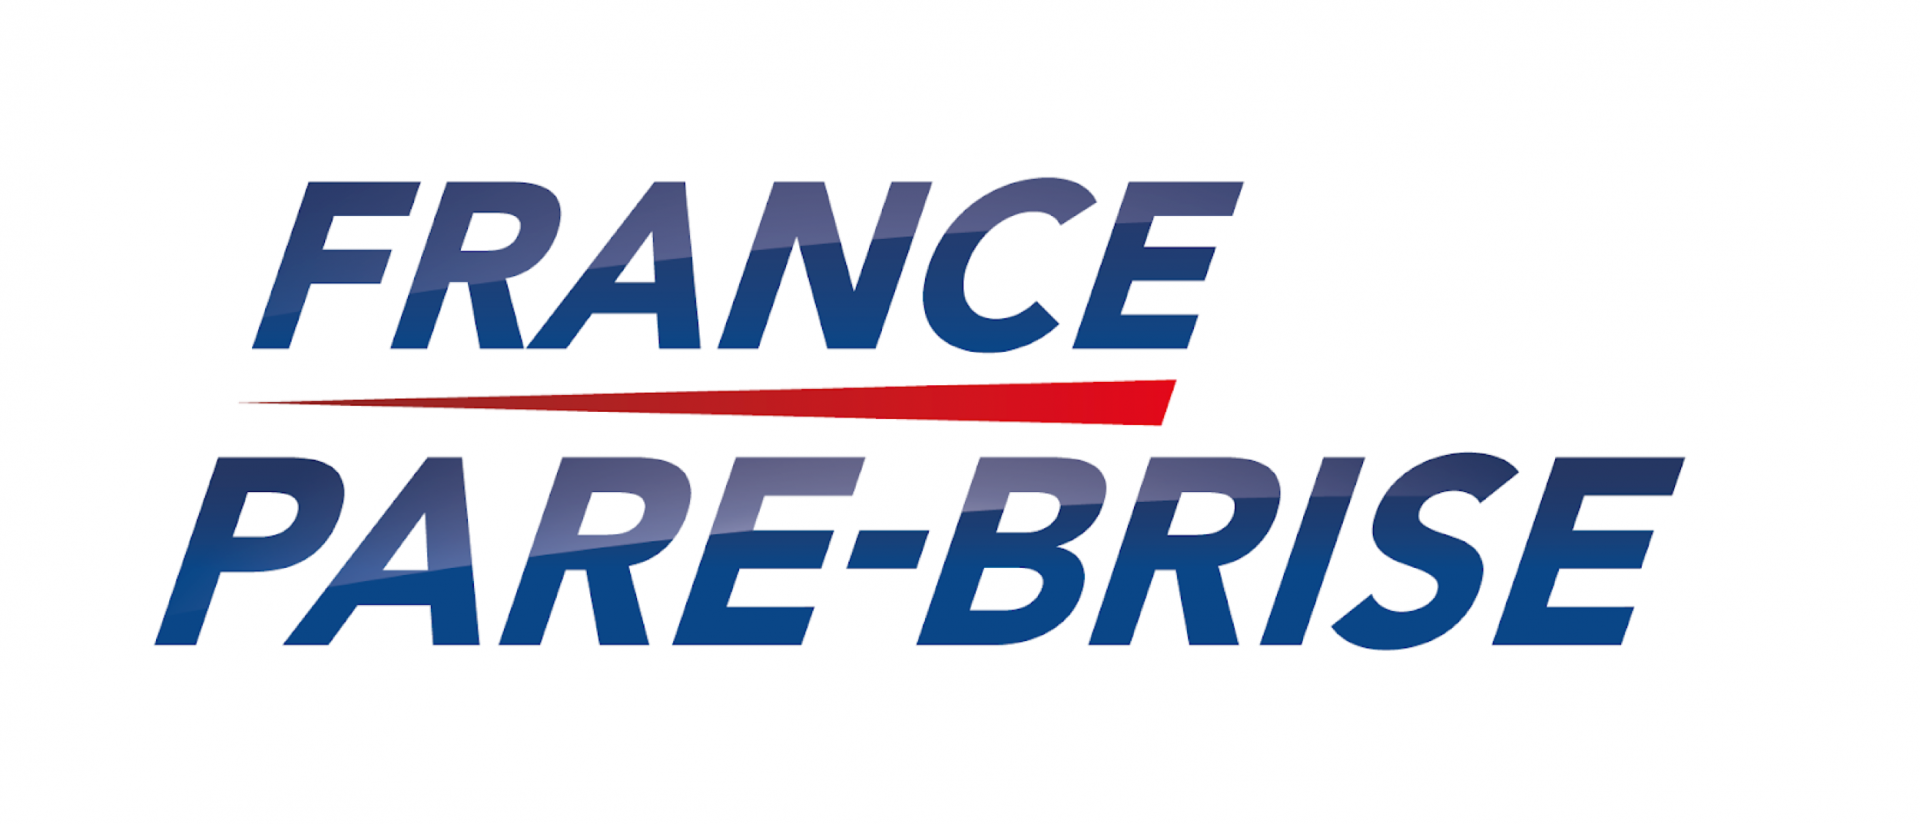 France Pare Brise